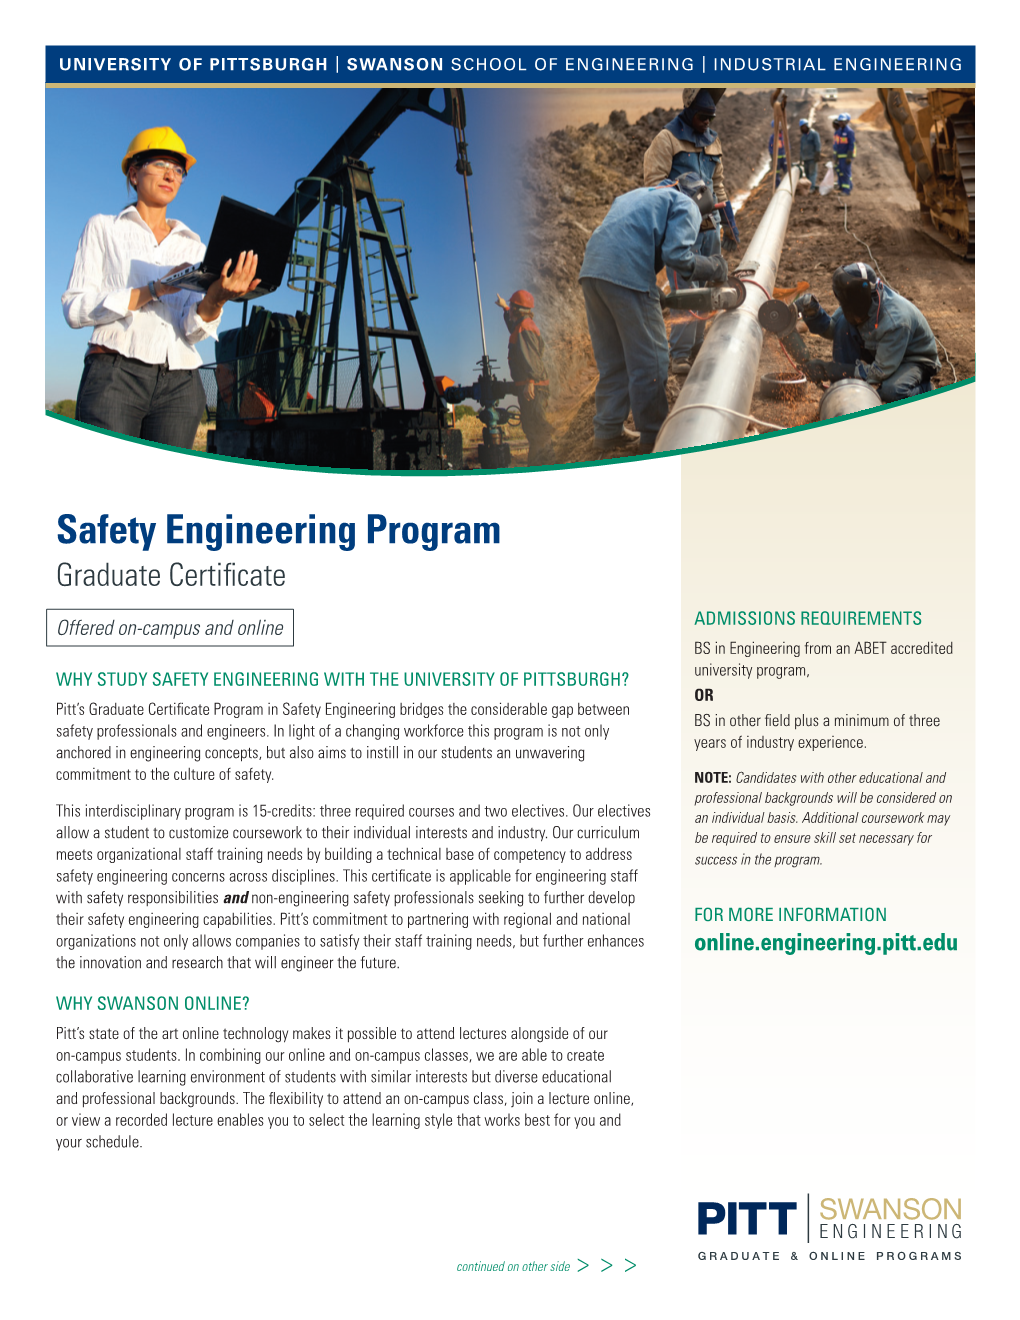 Safety Engineering Program Graduate Certificate